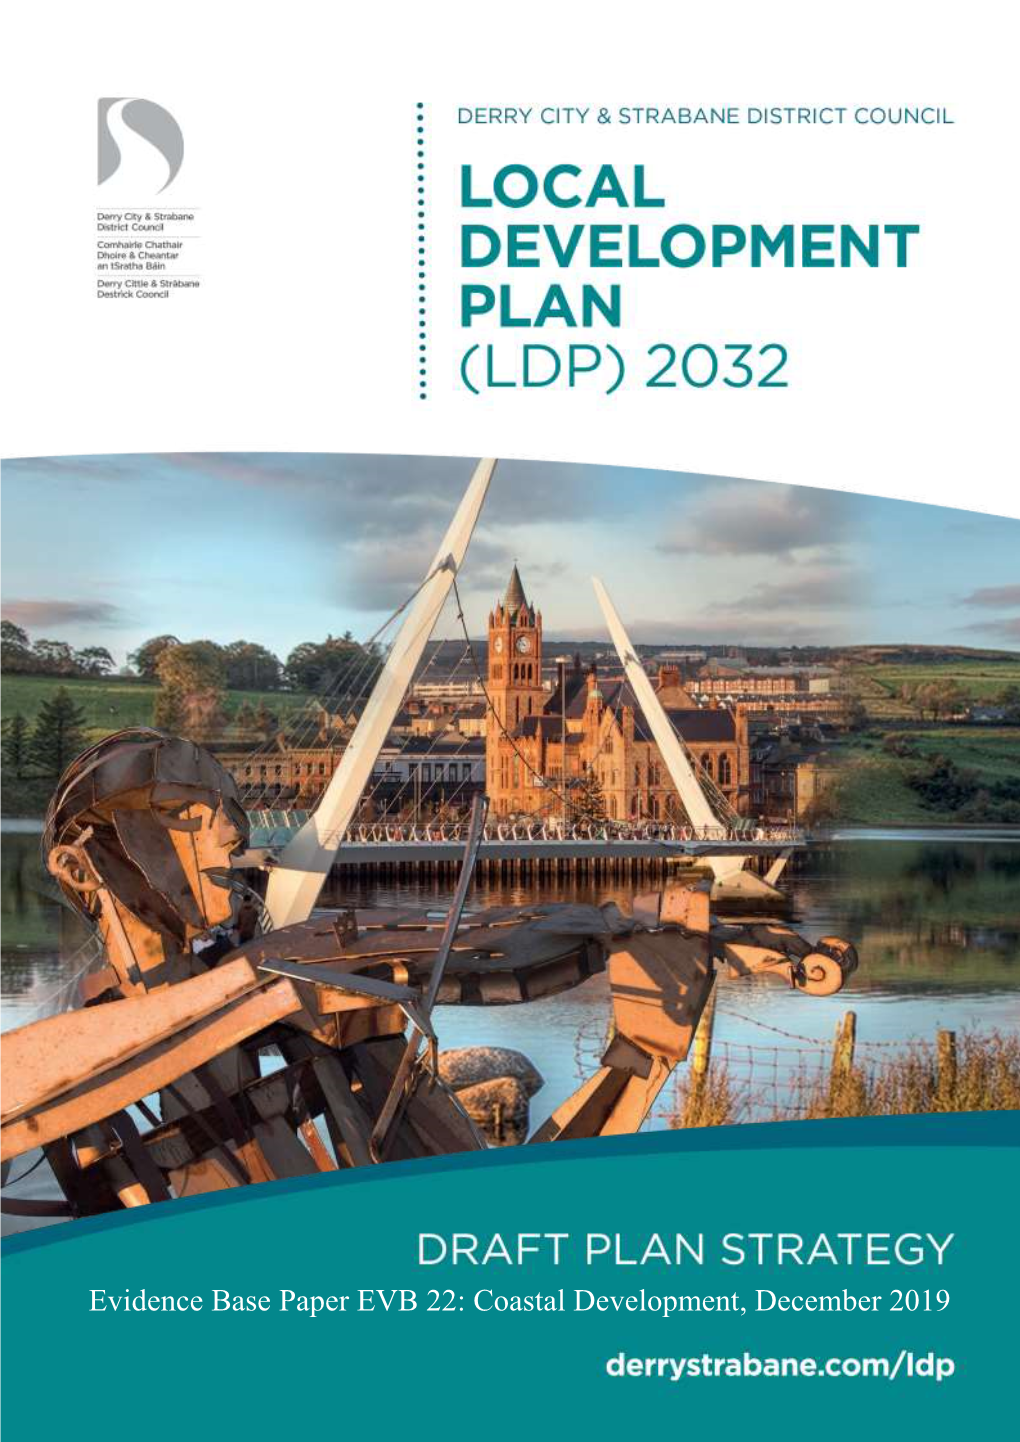 (Ldp) 2032 Evidence Base Paper: Evb 22 Coastal Development